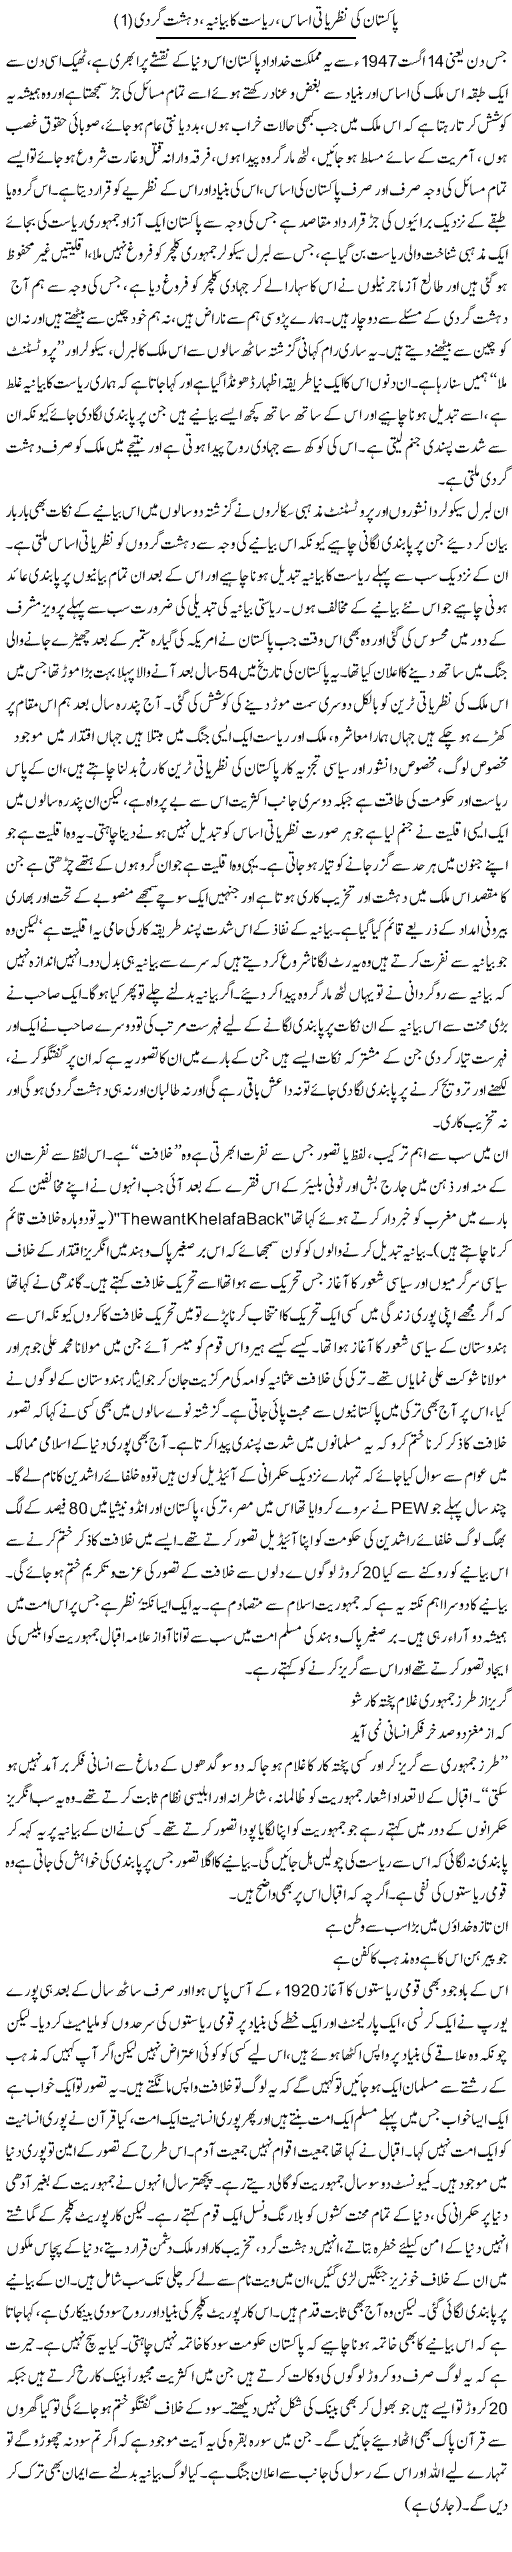 Pakistan ki nazriati asaas, riasat ka bayania, dehshat gardi (1) | Orya Maqbool Jan | Daily Urdu Columns